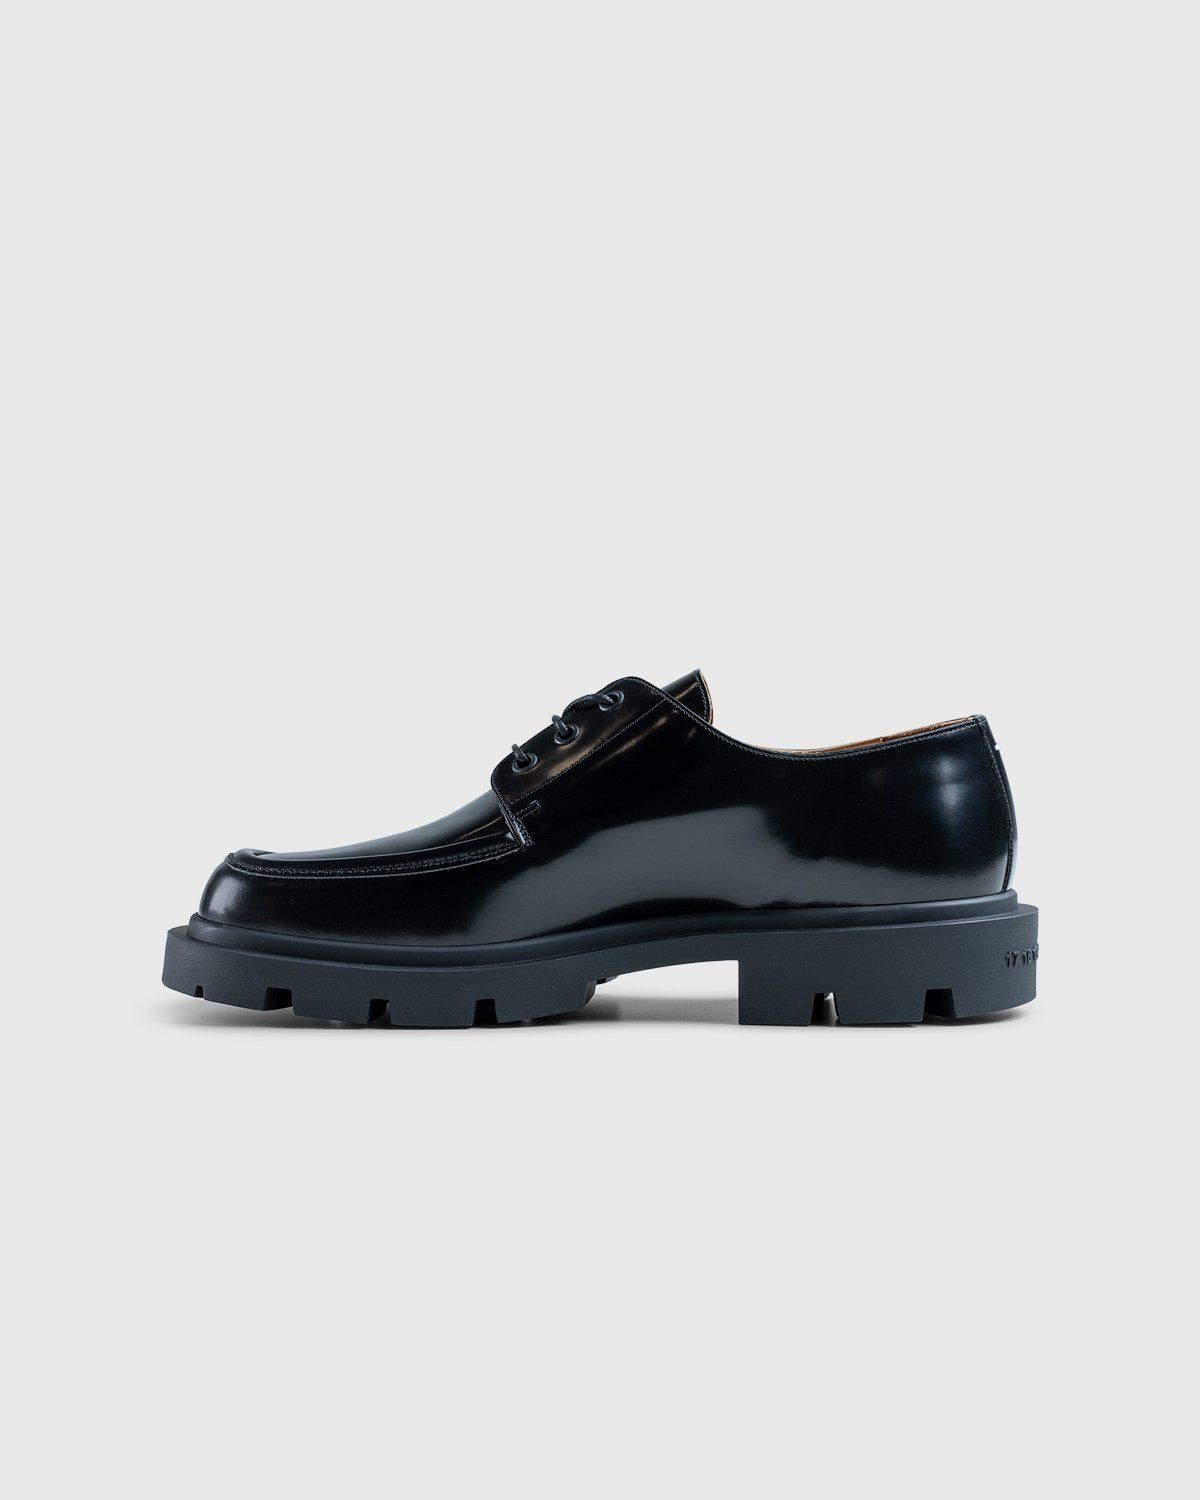 Maison Margiela – Cleated Sole Shoes Black - Oxfords & Lace Ups - Black - Image 7